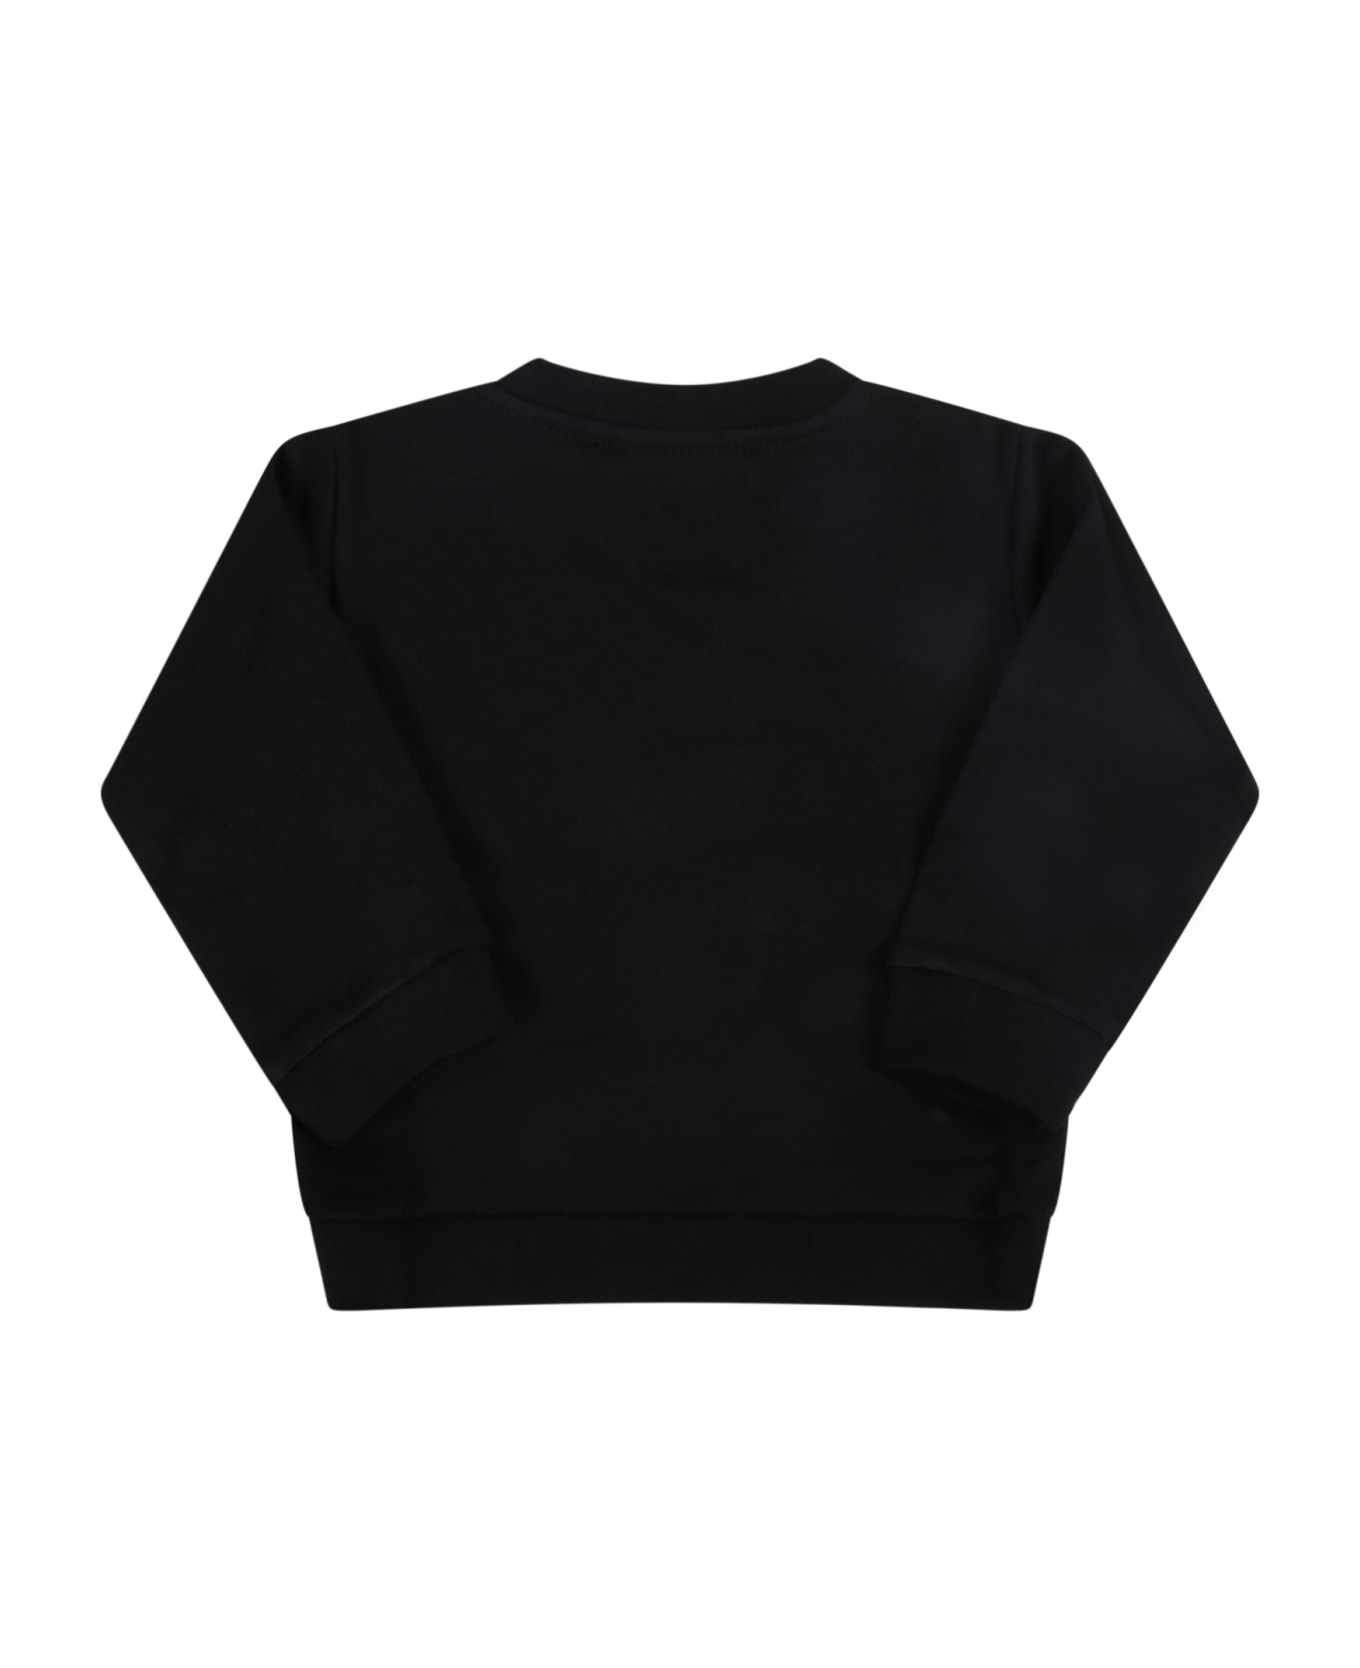 Balmain Black Sweatshirt For Baby Girl With Logo - Black